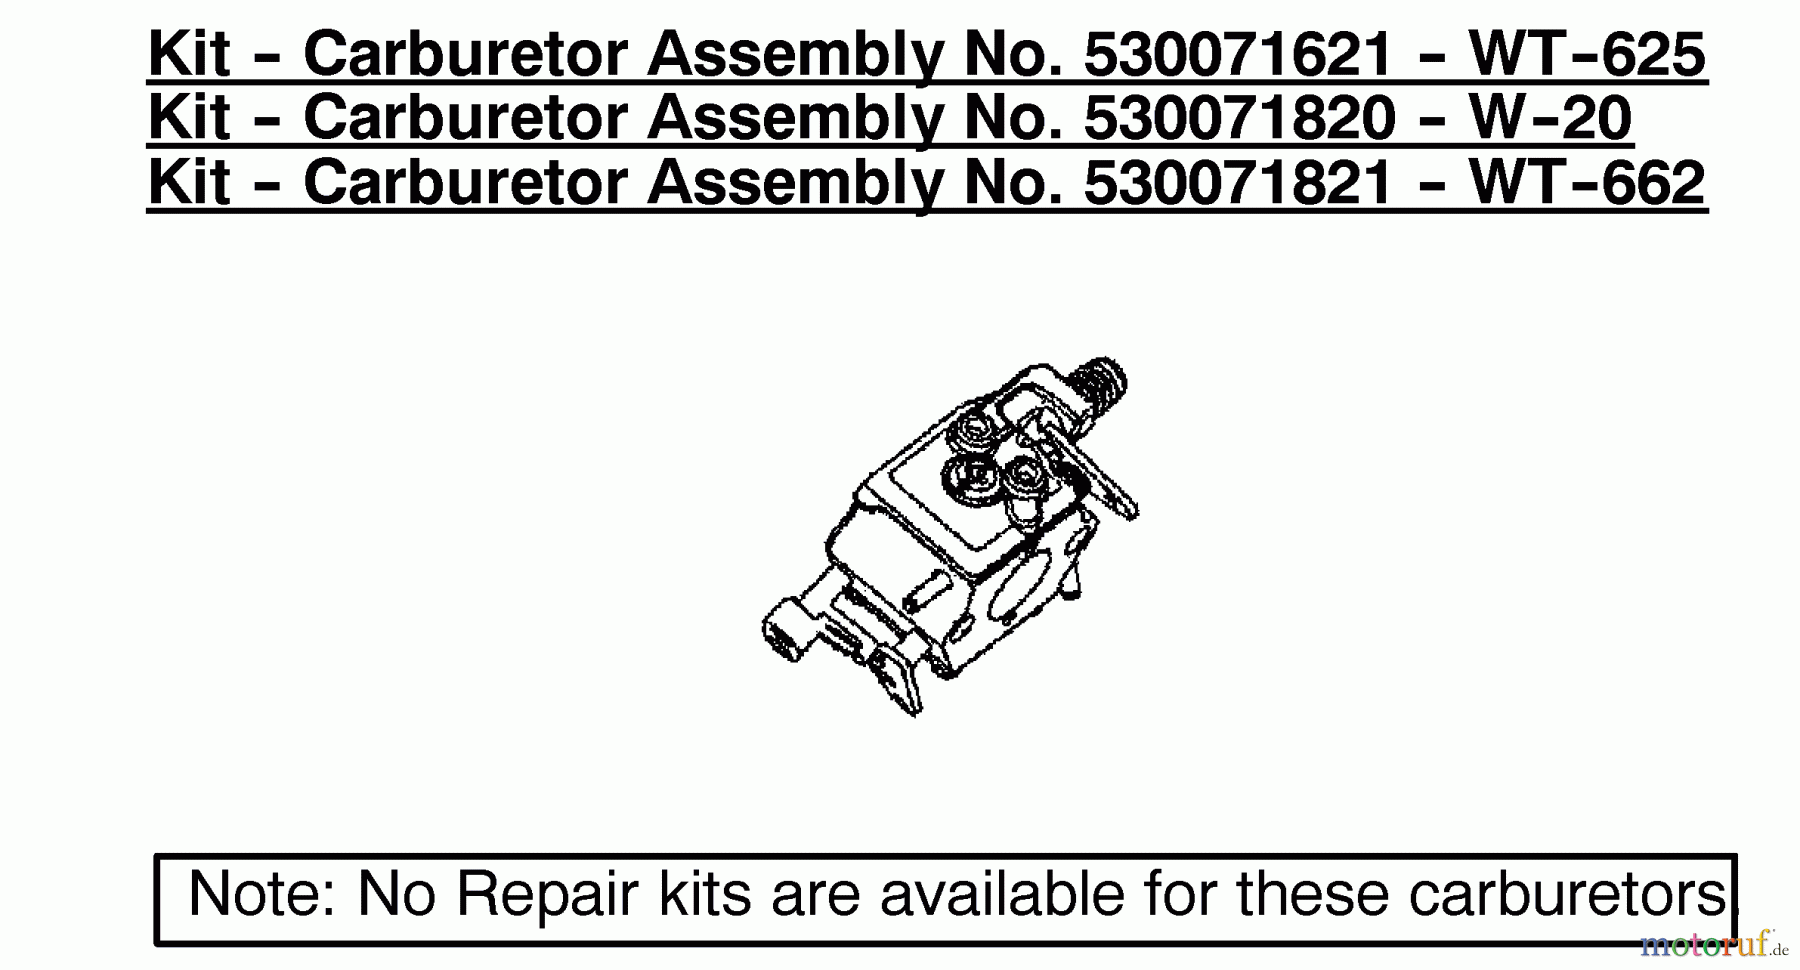  Poulan / Weed Eater Motorsägen 2450 (Type 2) - Poulan Woodmaster Chainsaw Kit - Carburetor Assembly 530071621/530071820/530071821